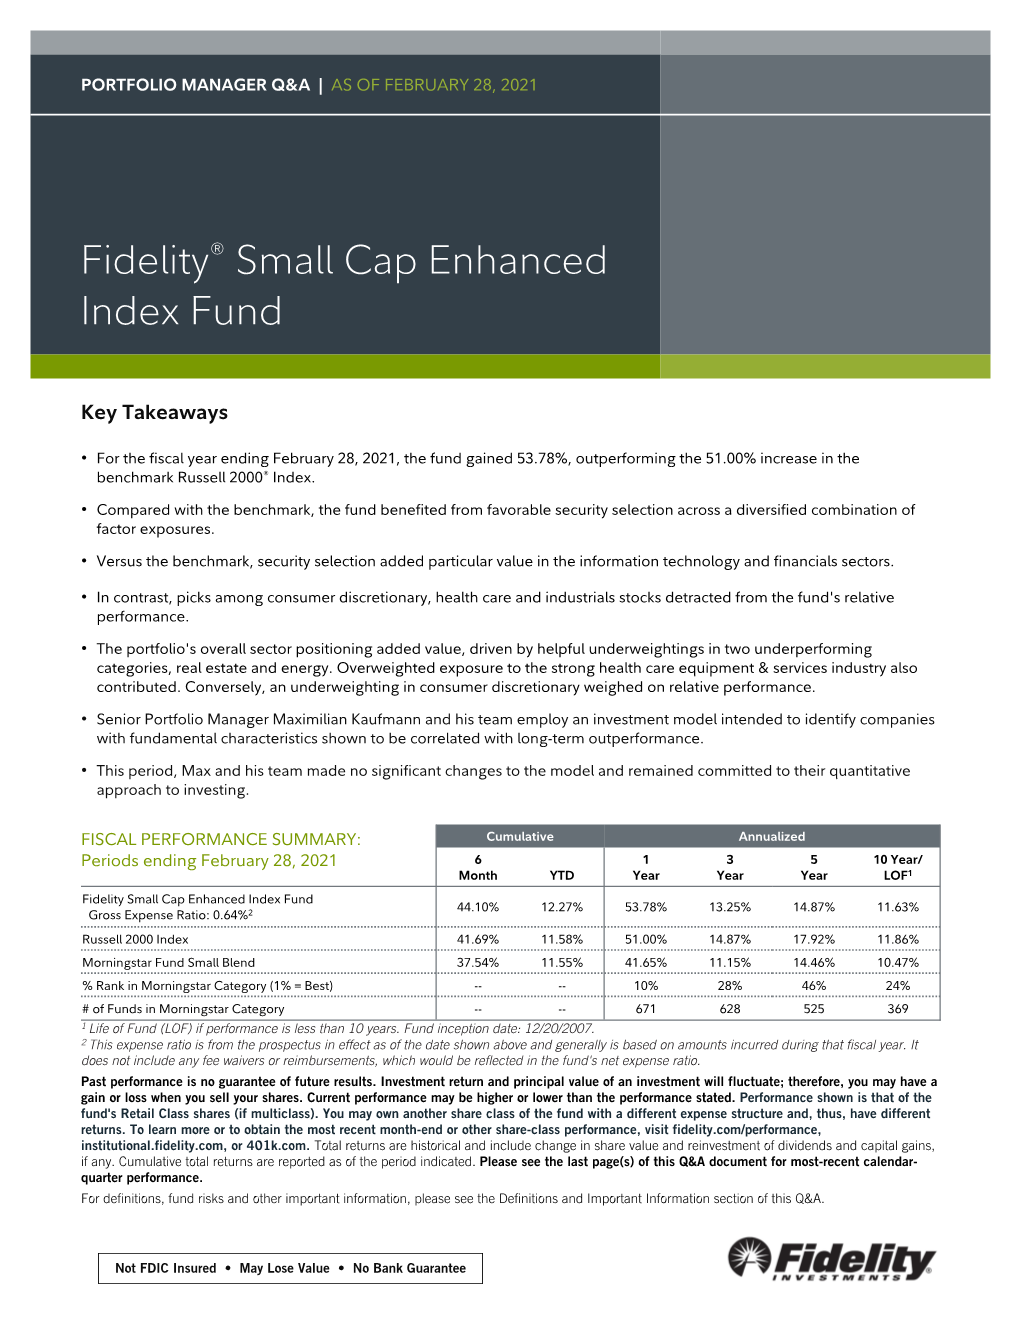 Fidelity® Small Cap Enhanced Index Fund